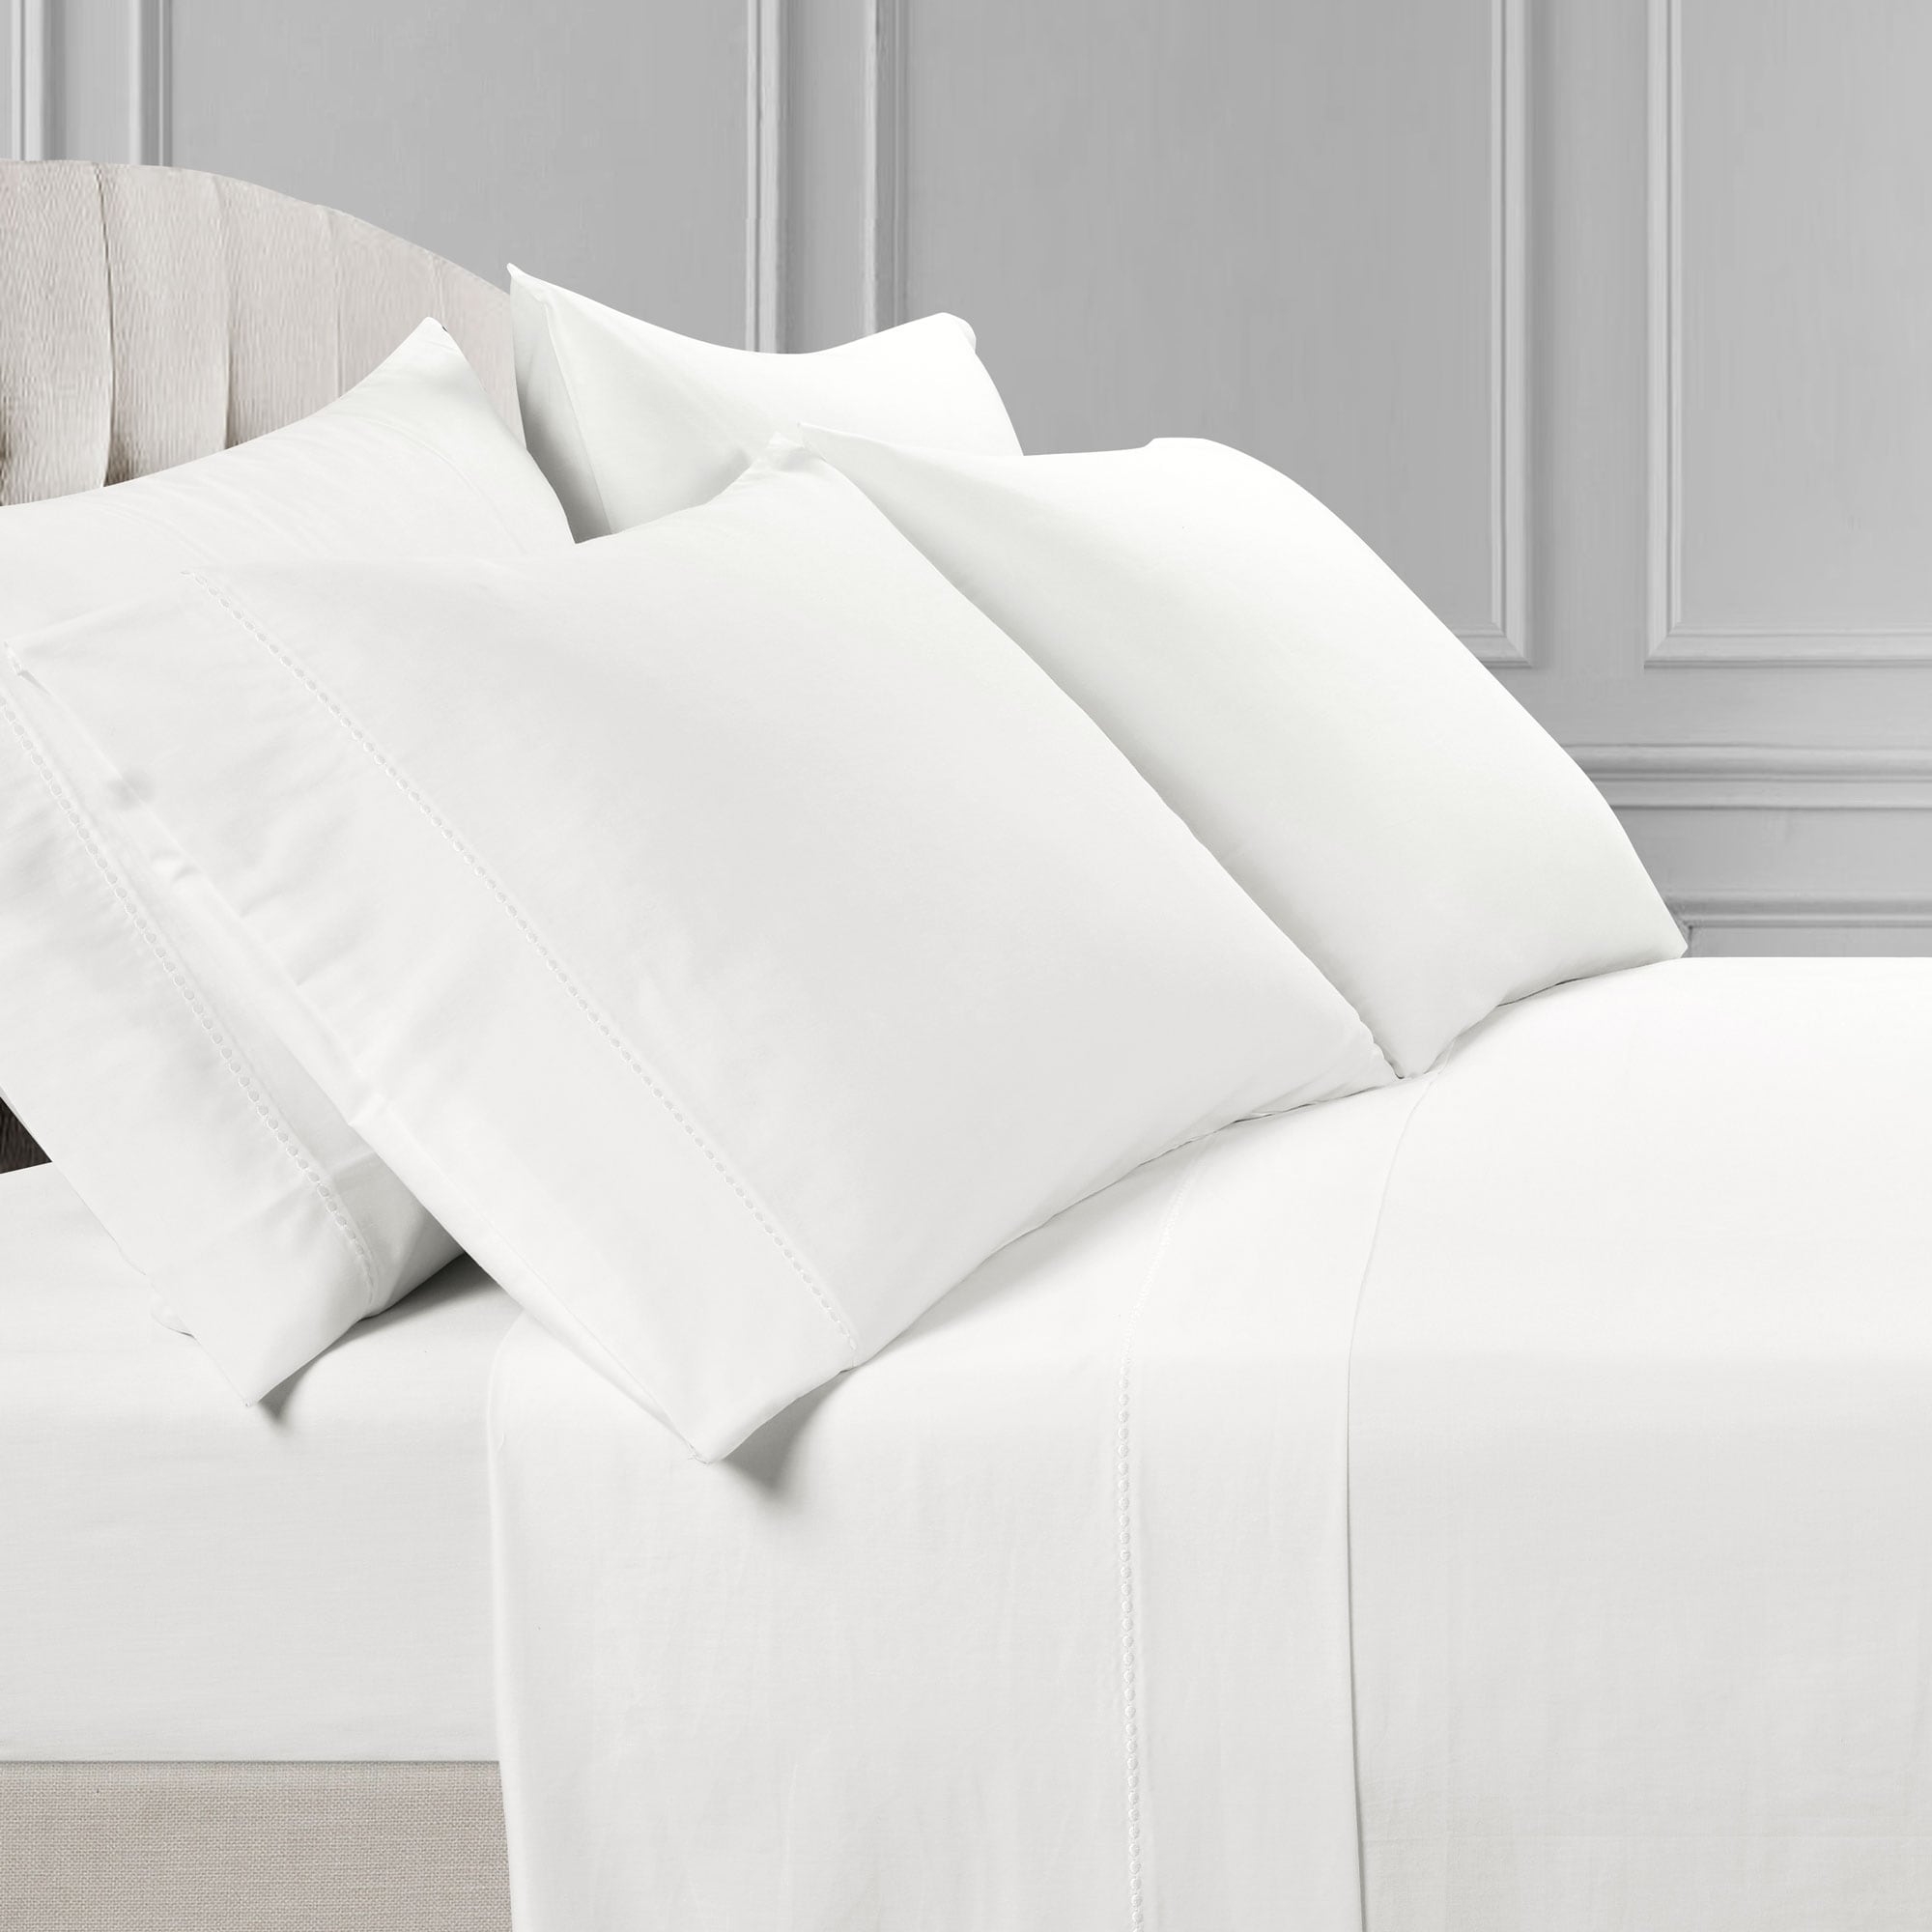 Teen & Dorm Lush Decor Bed Sheet Sets - Bed Bath & Beyond